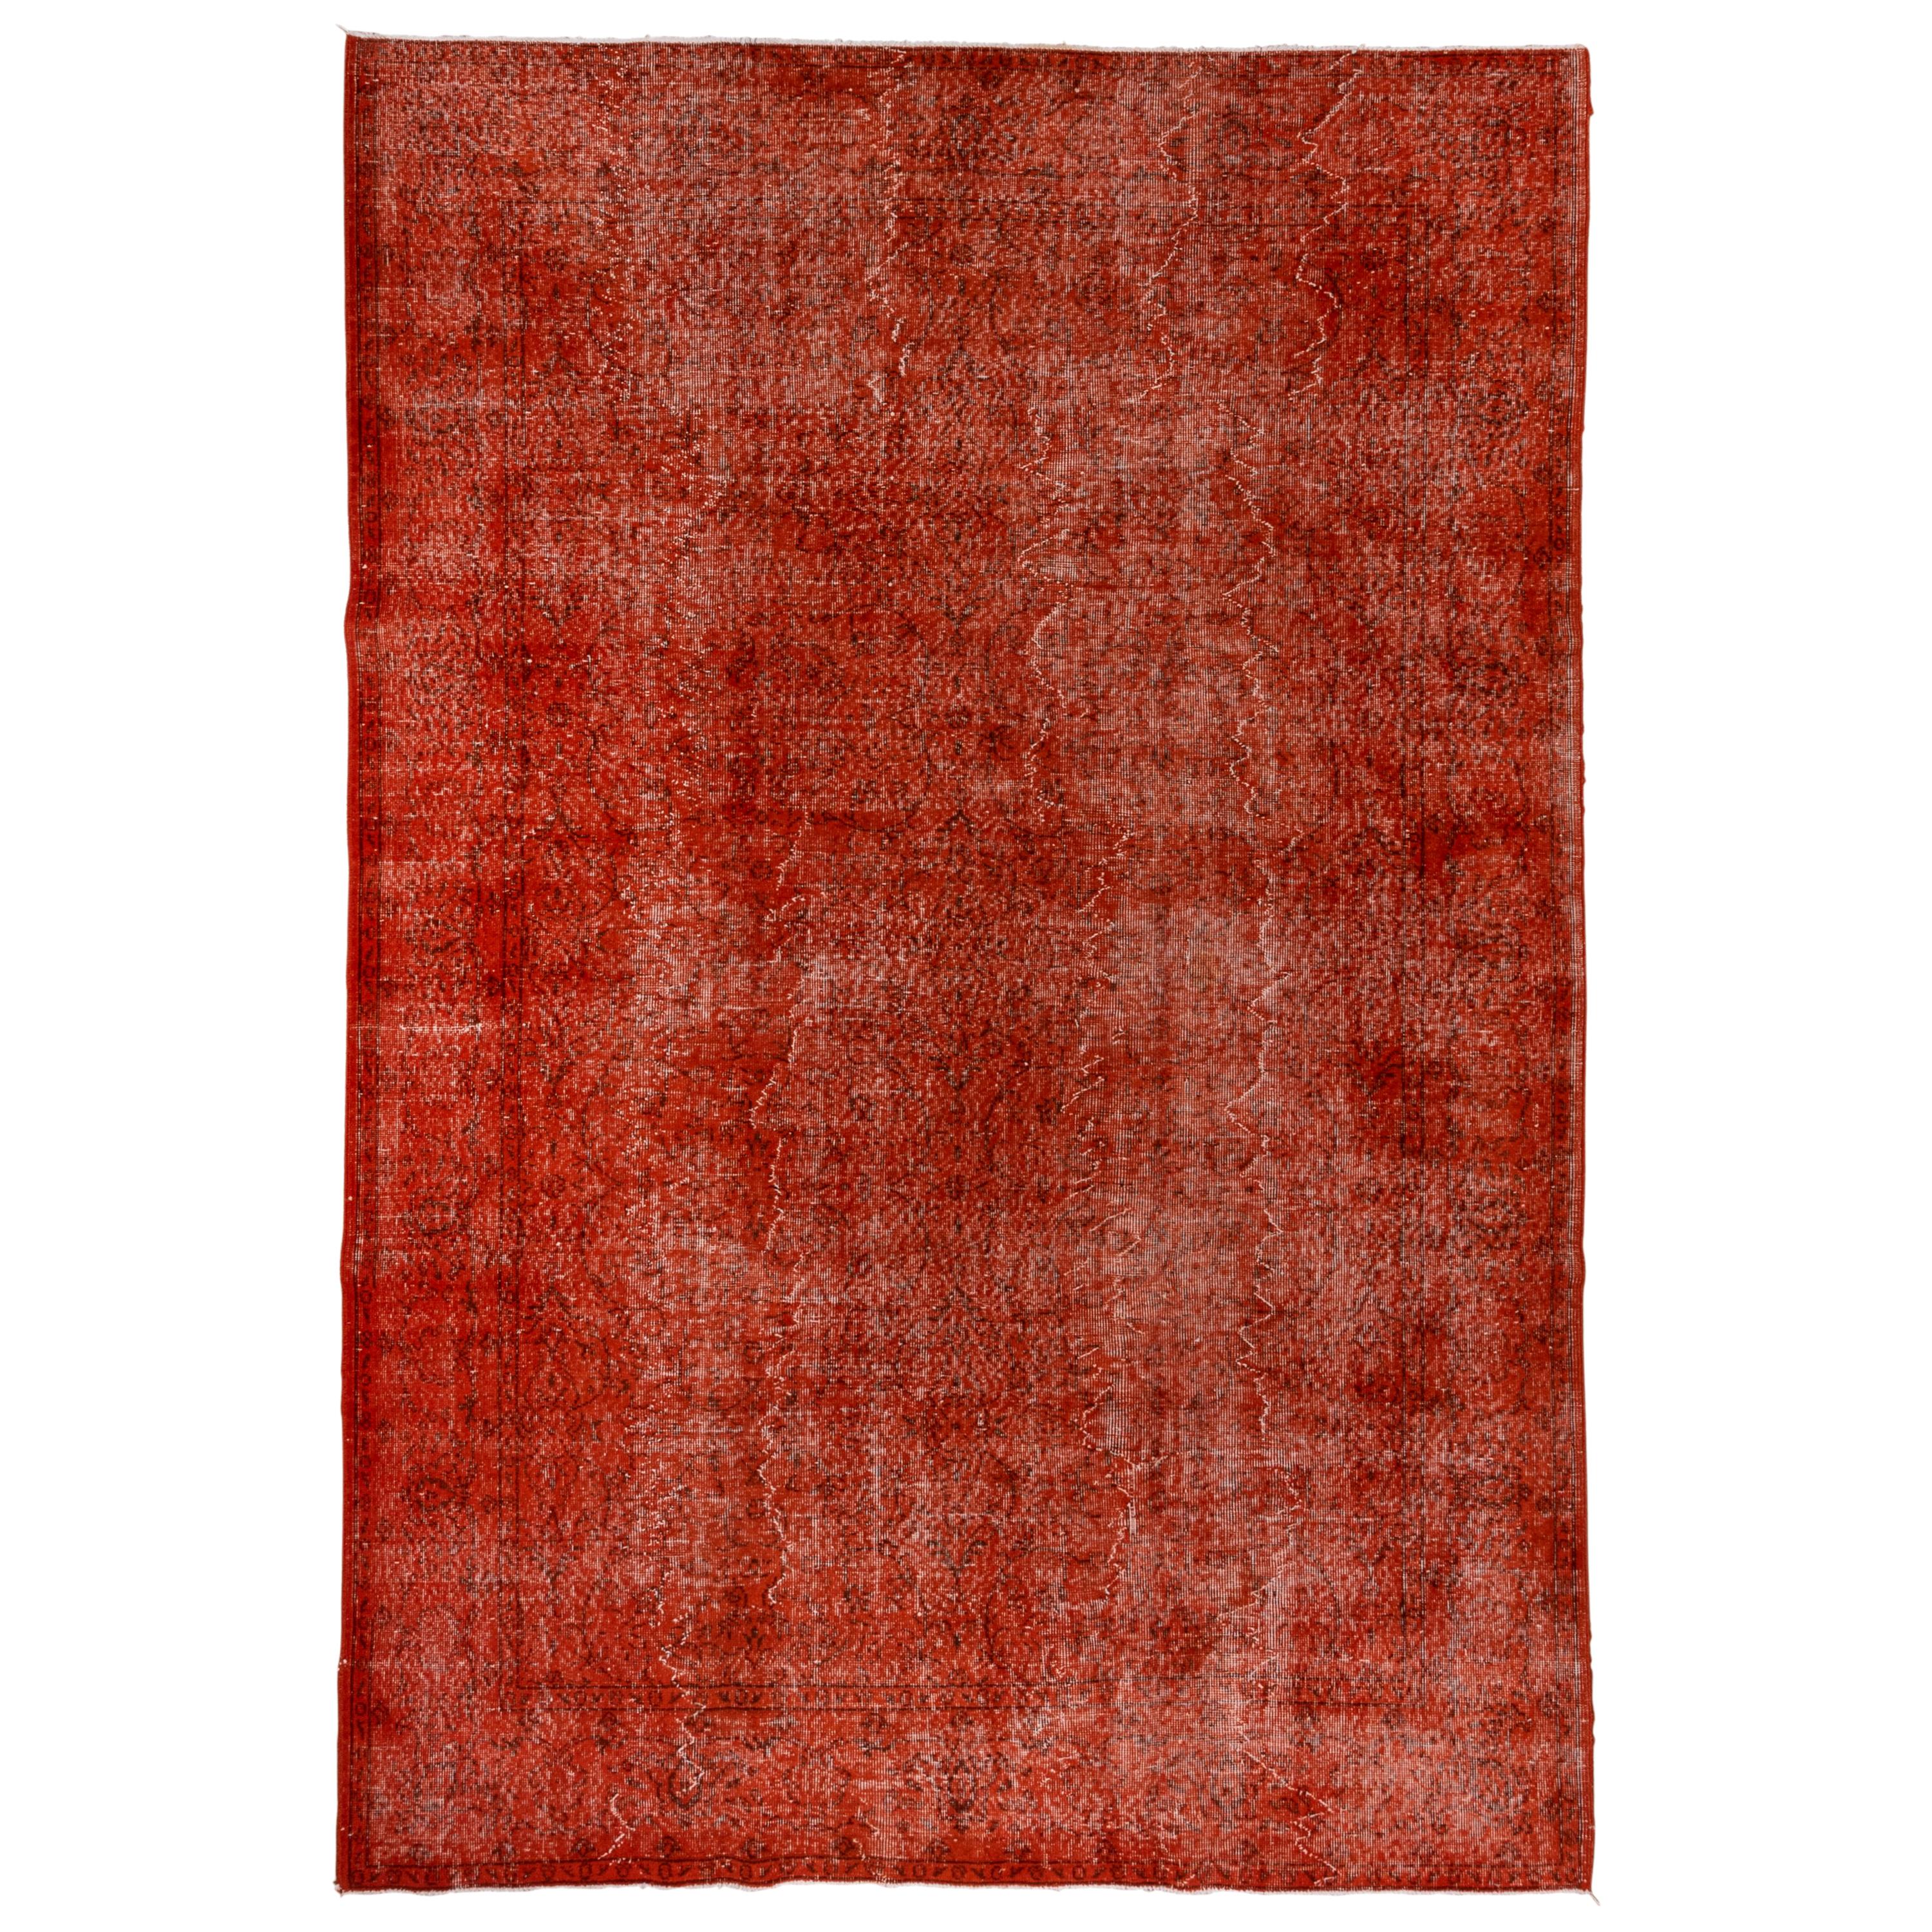 Roter überzogener Vintage-Teppich